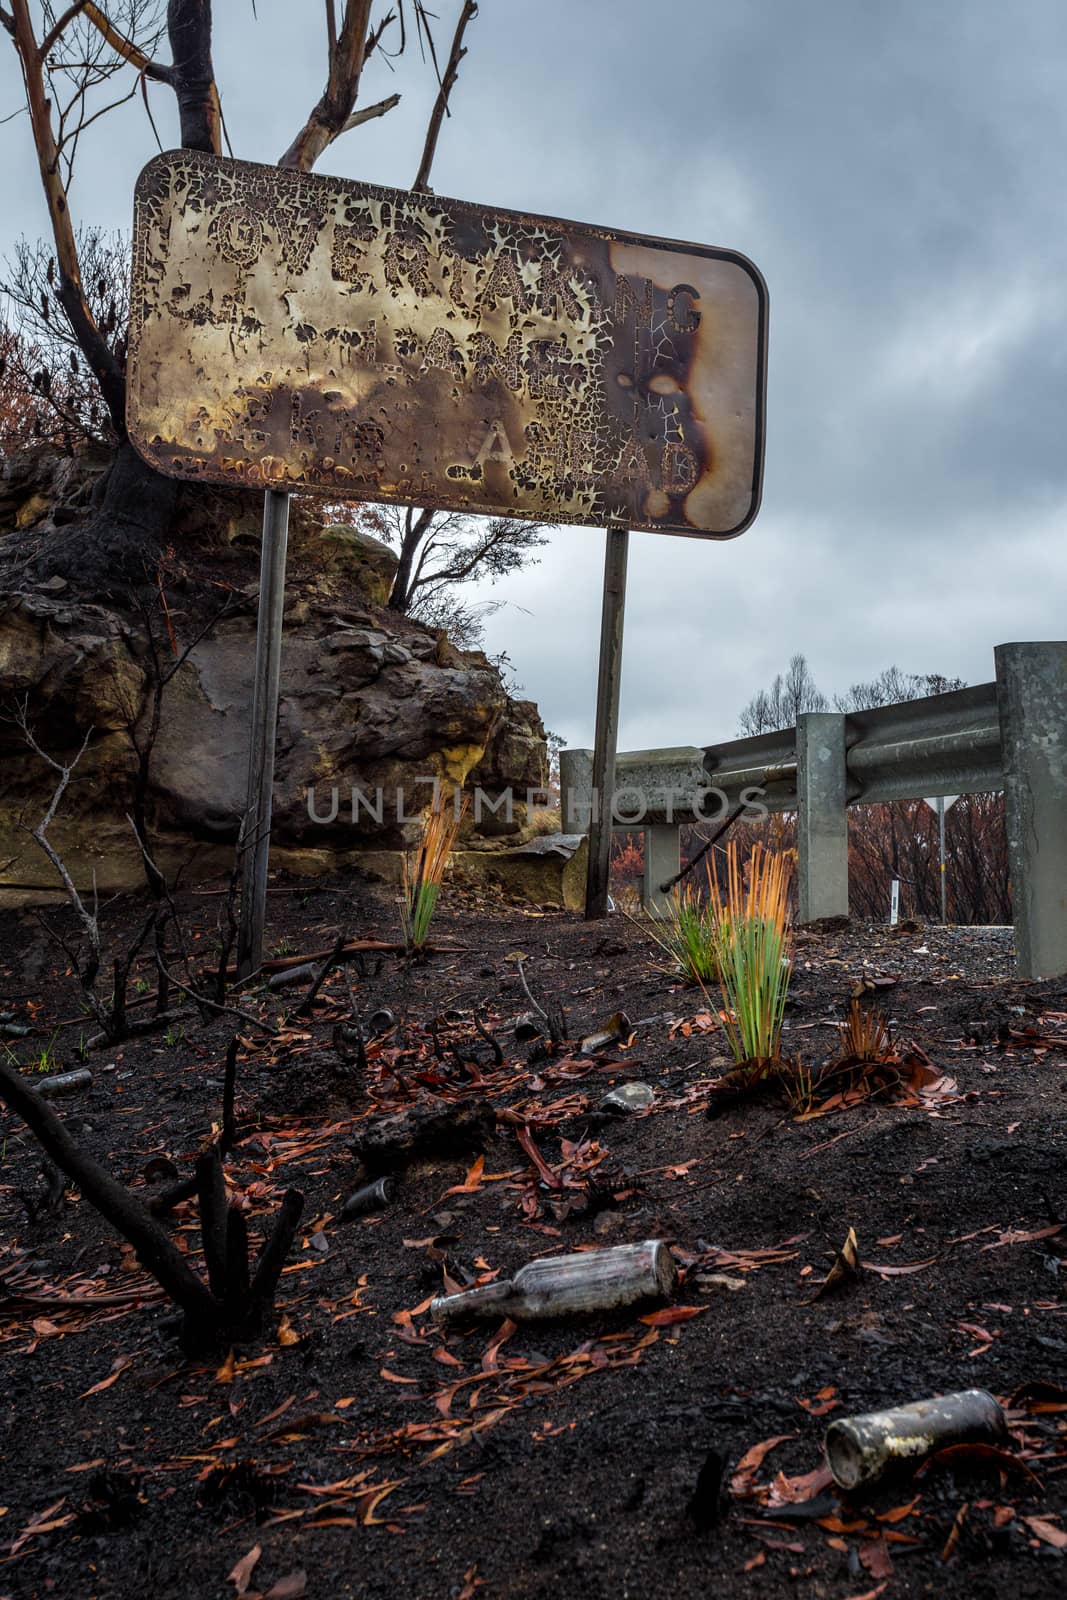 Burnt road sign, rubbish and landscape after bush fires Australi by lovleah